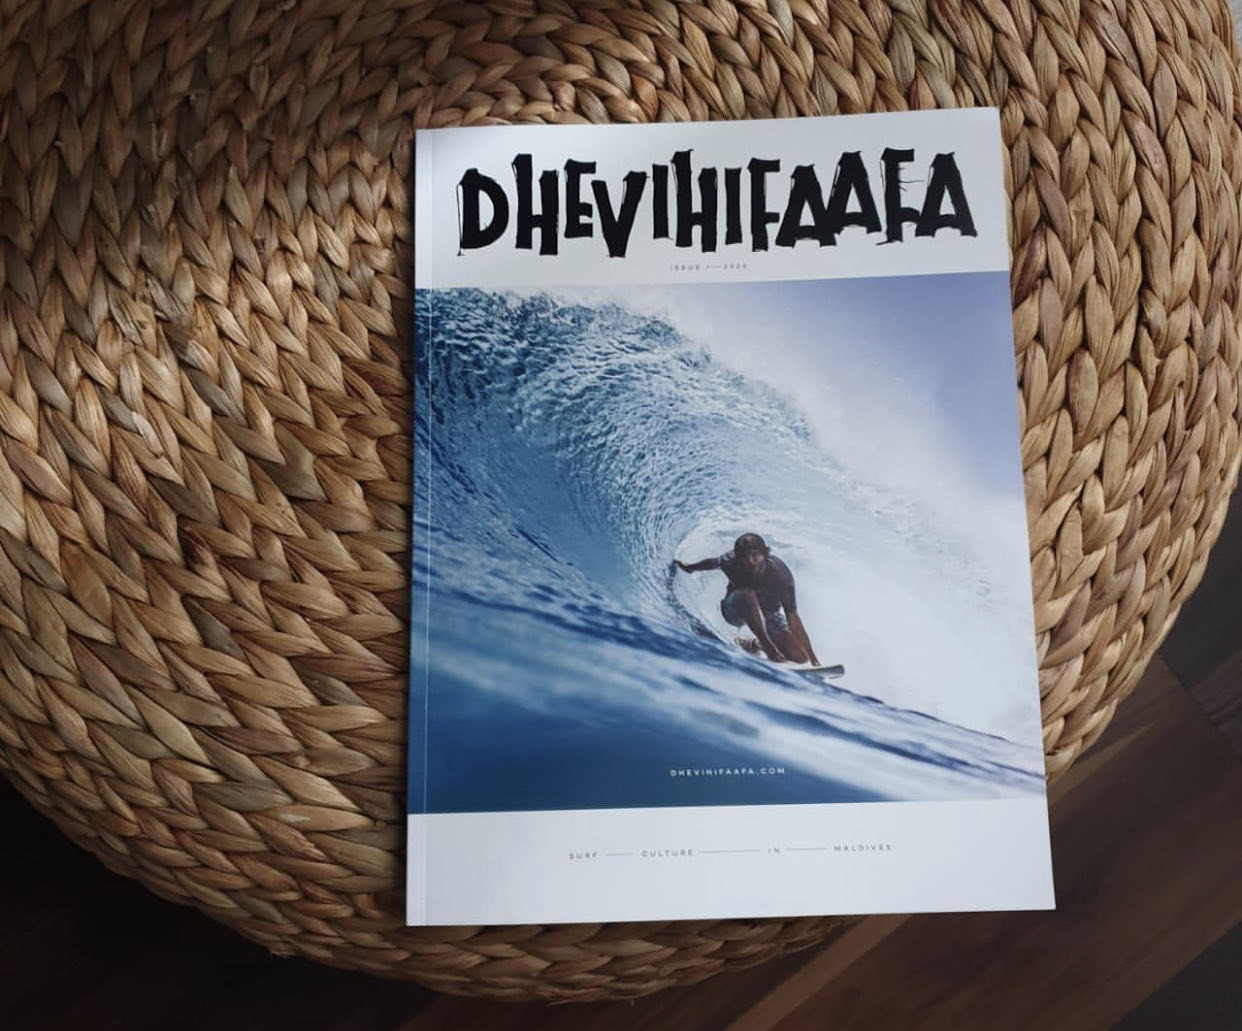 'Dhevi Hifaafa' - Maldives' First Surf Magazine Out Now!